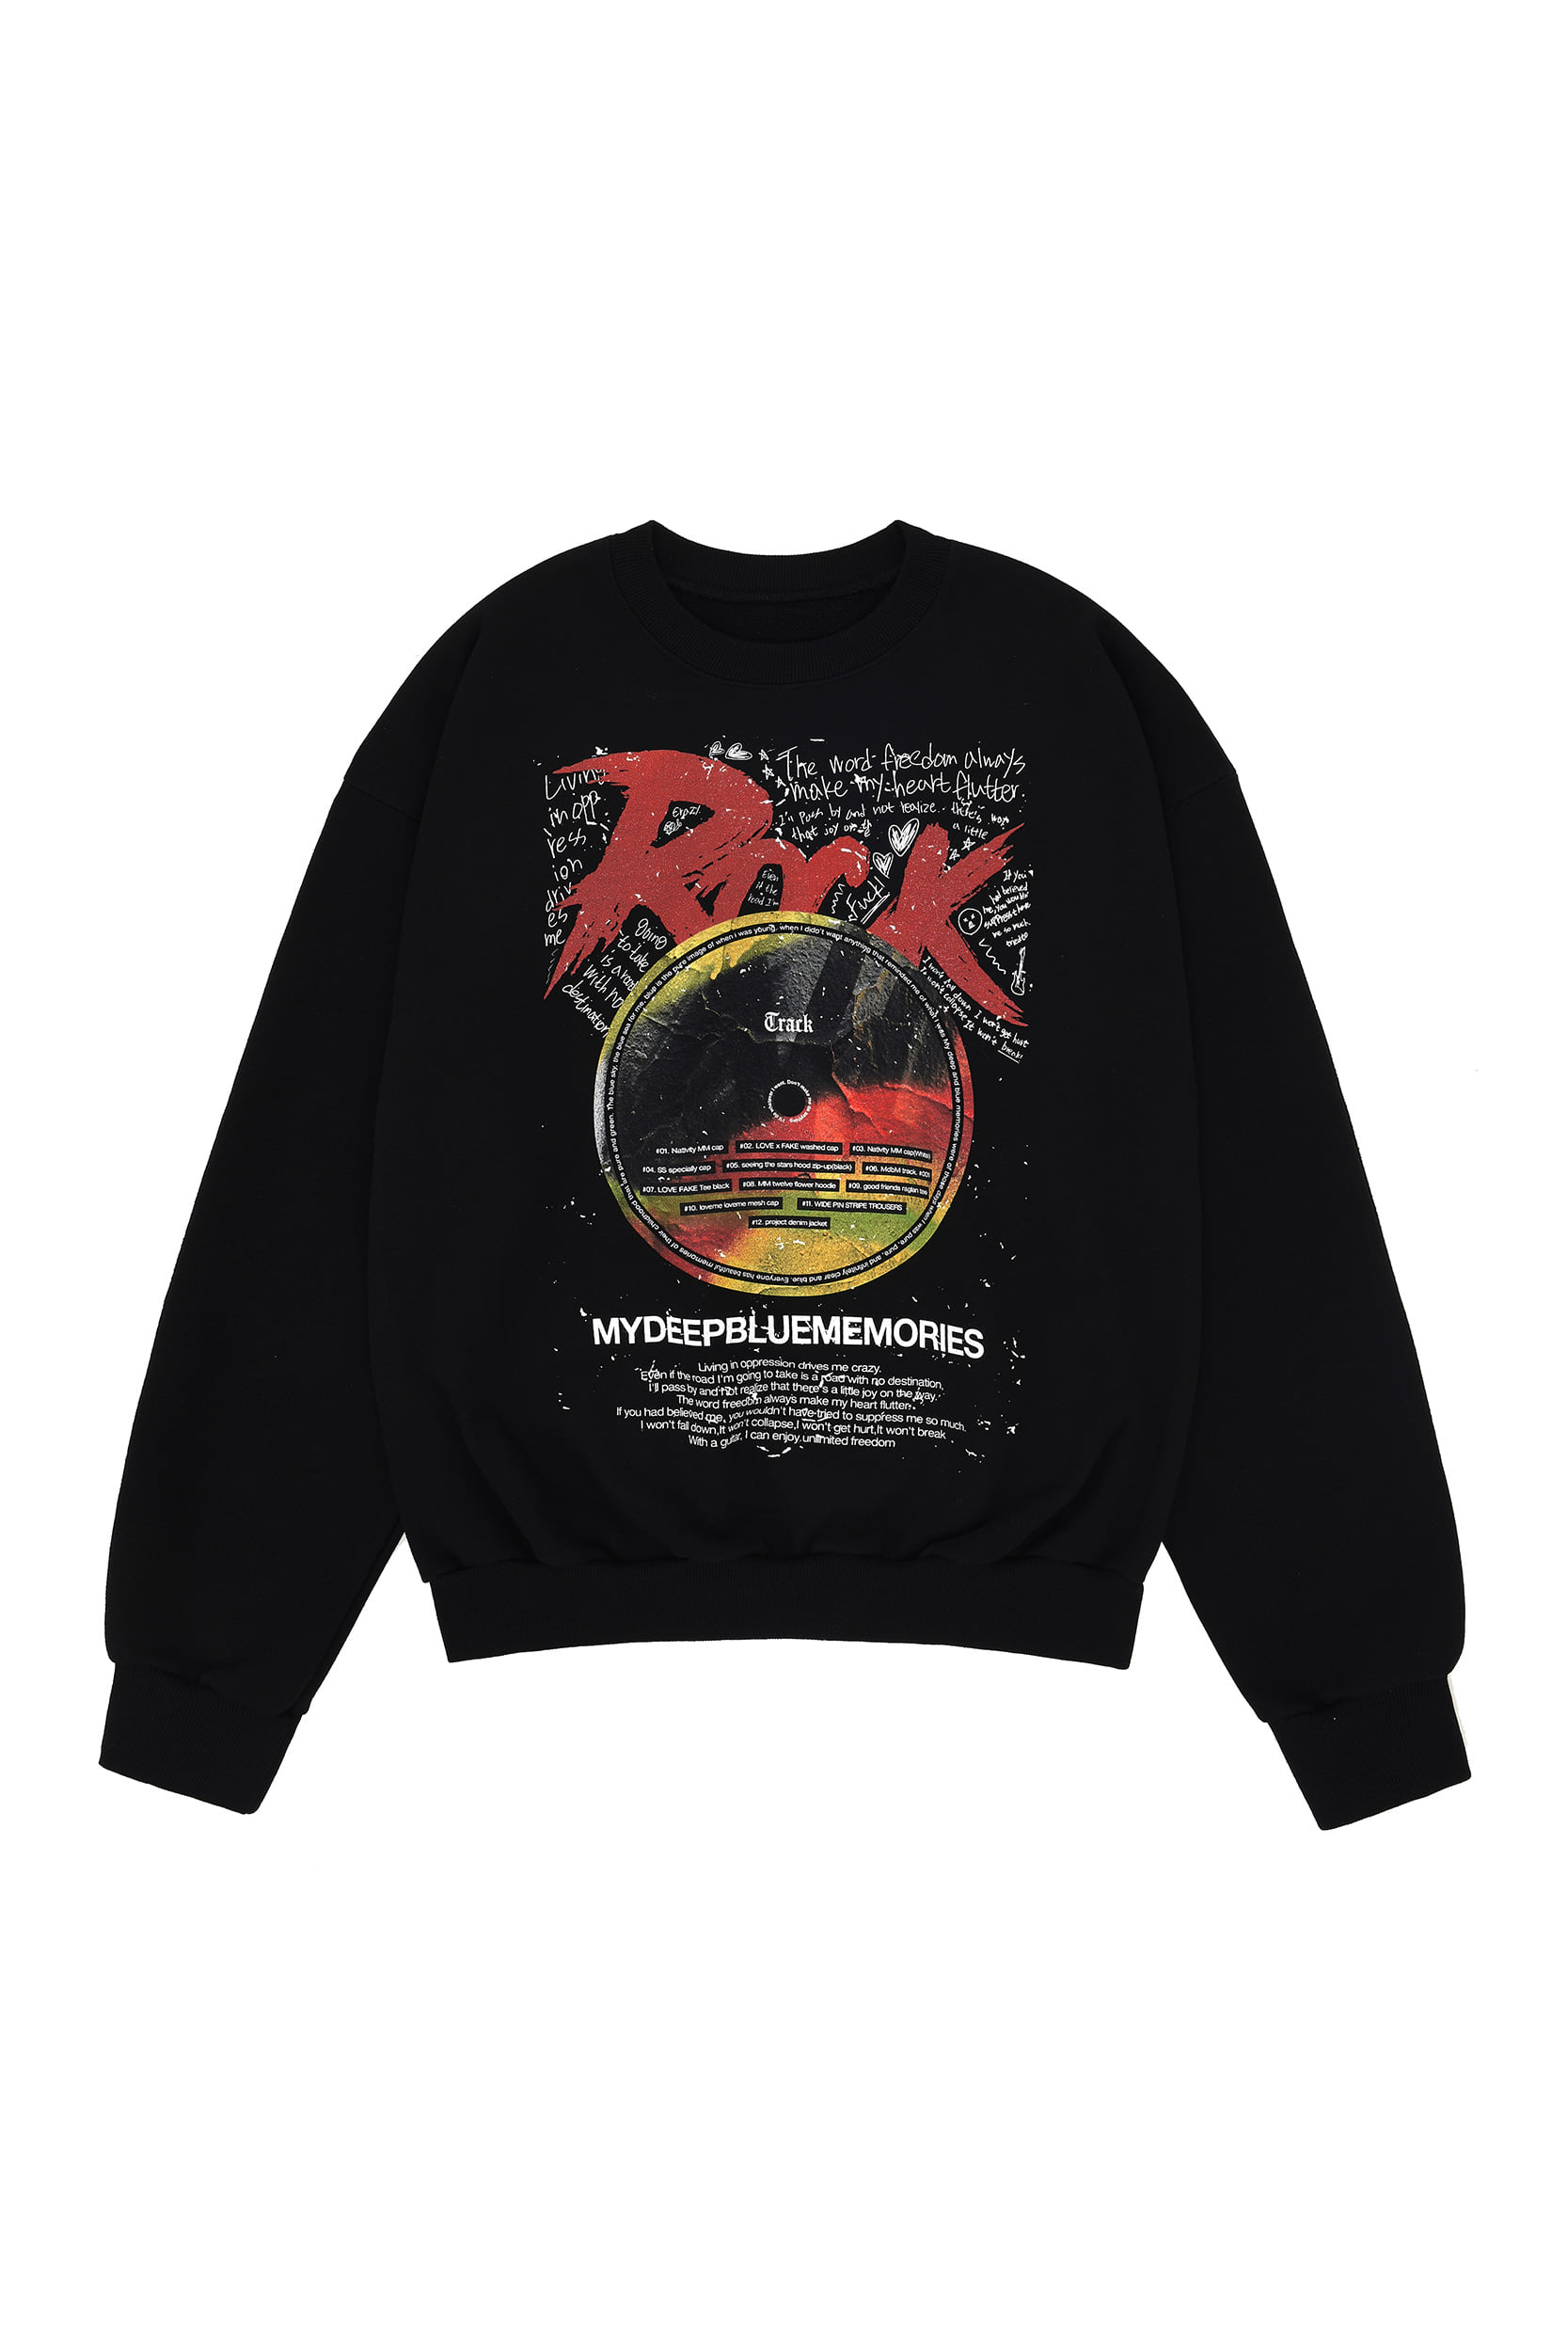 Rock and mdbm Sweatshirt Black